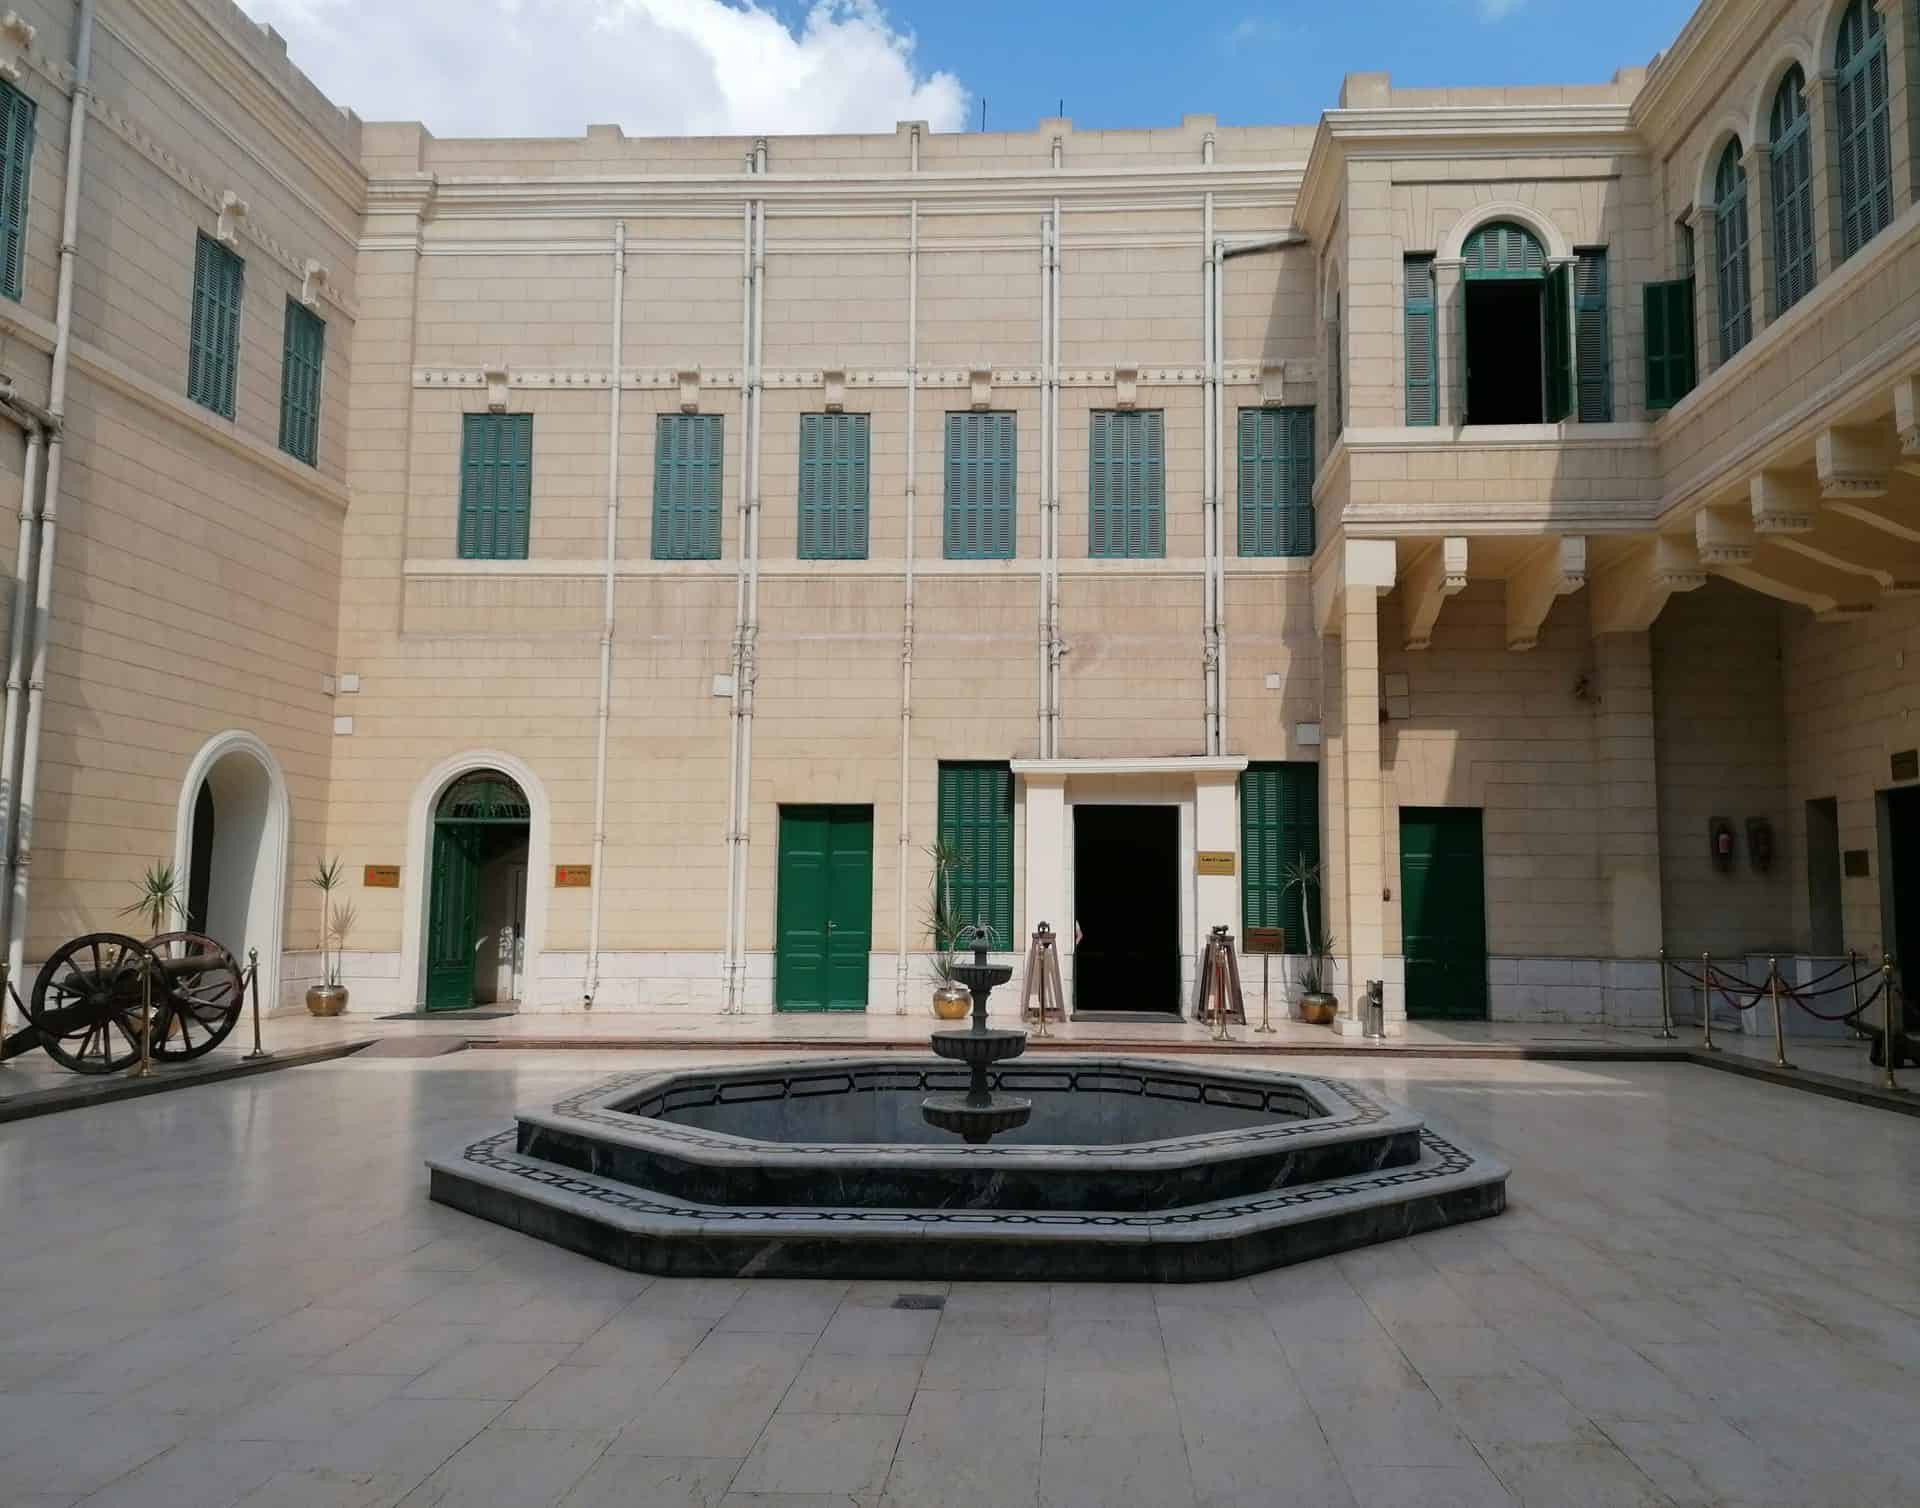 The Inner Court of Abdeen Palace